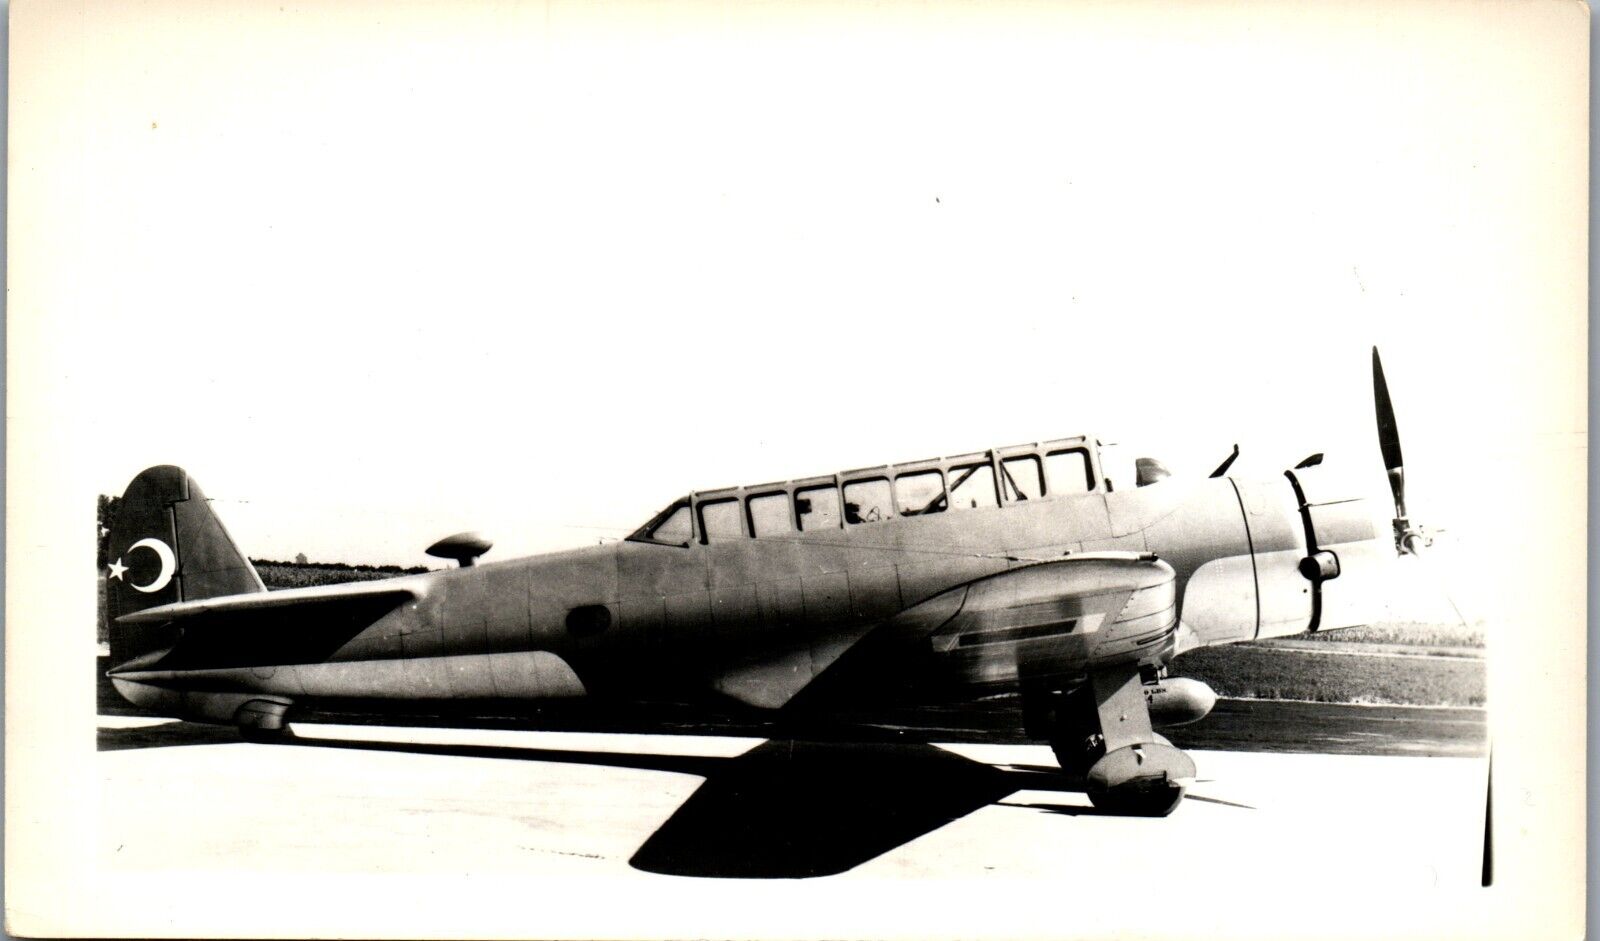 Vultee V-11 Monoplane Photo (3 x 5)